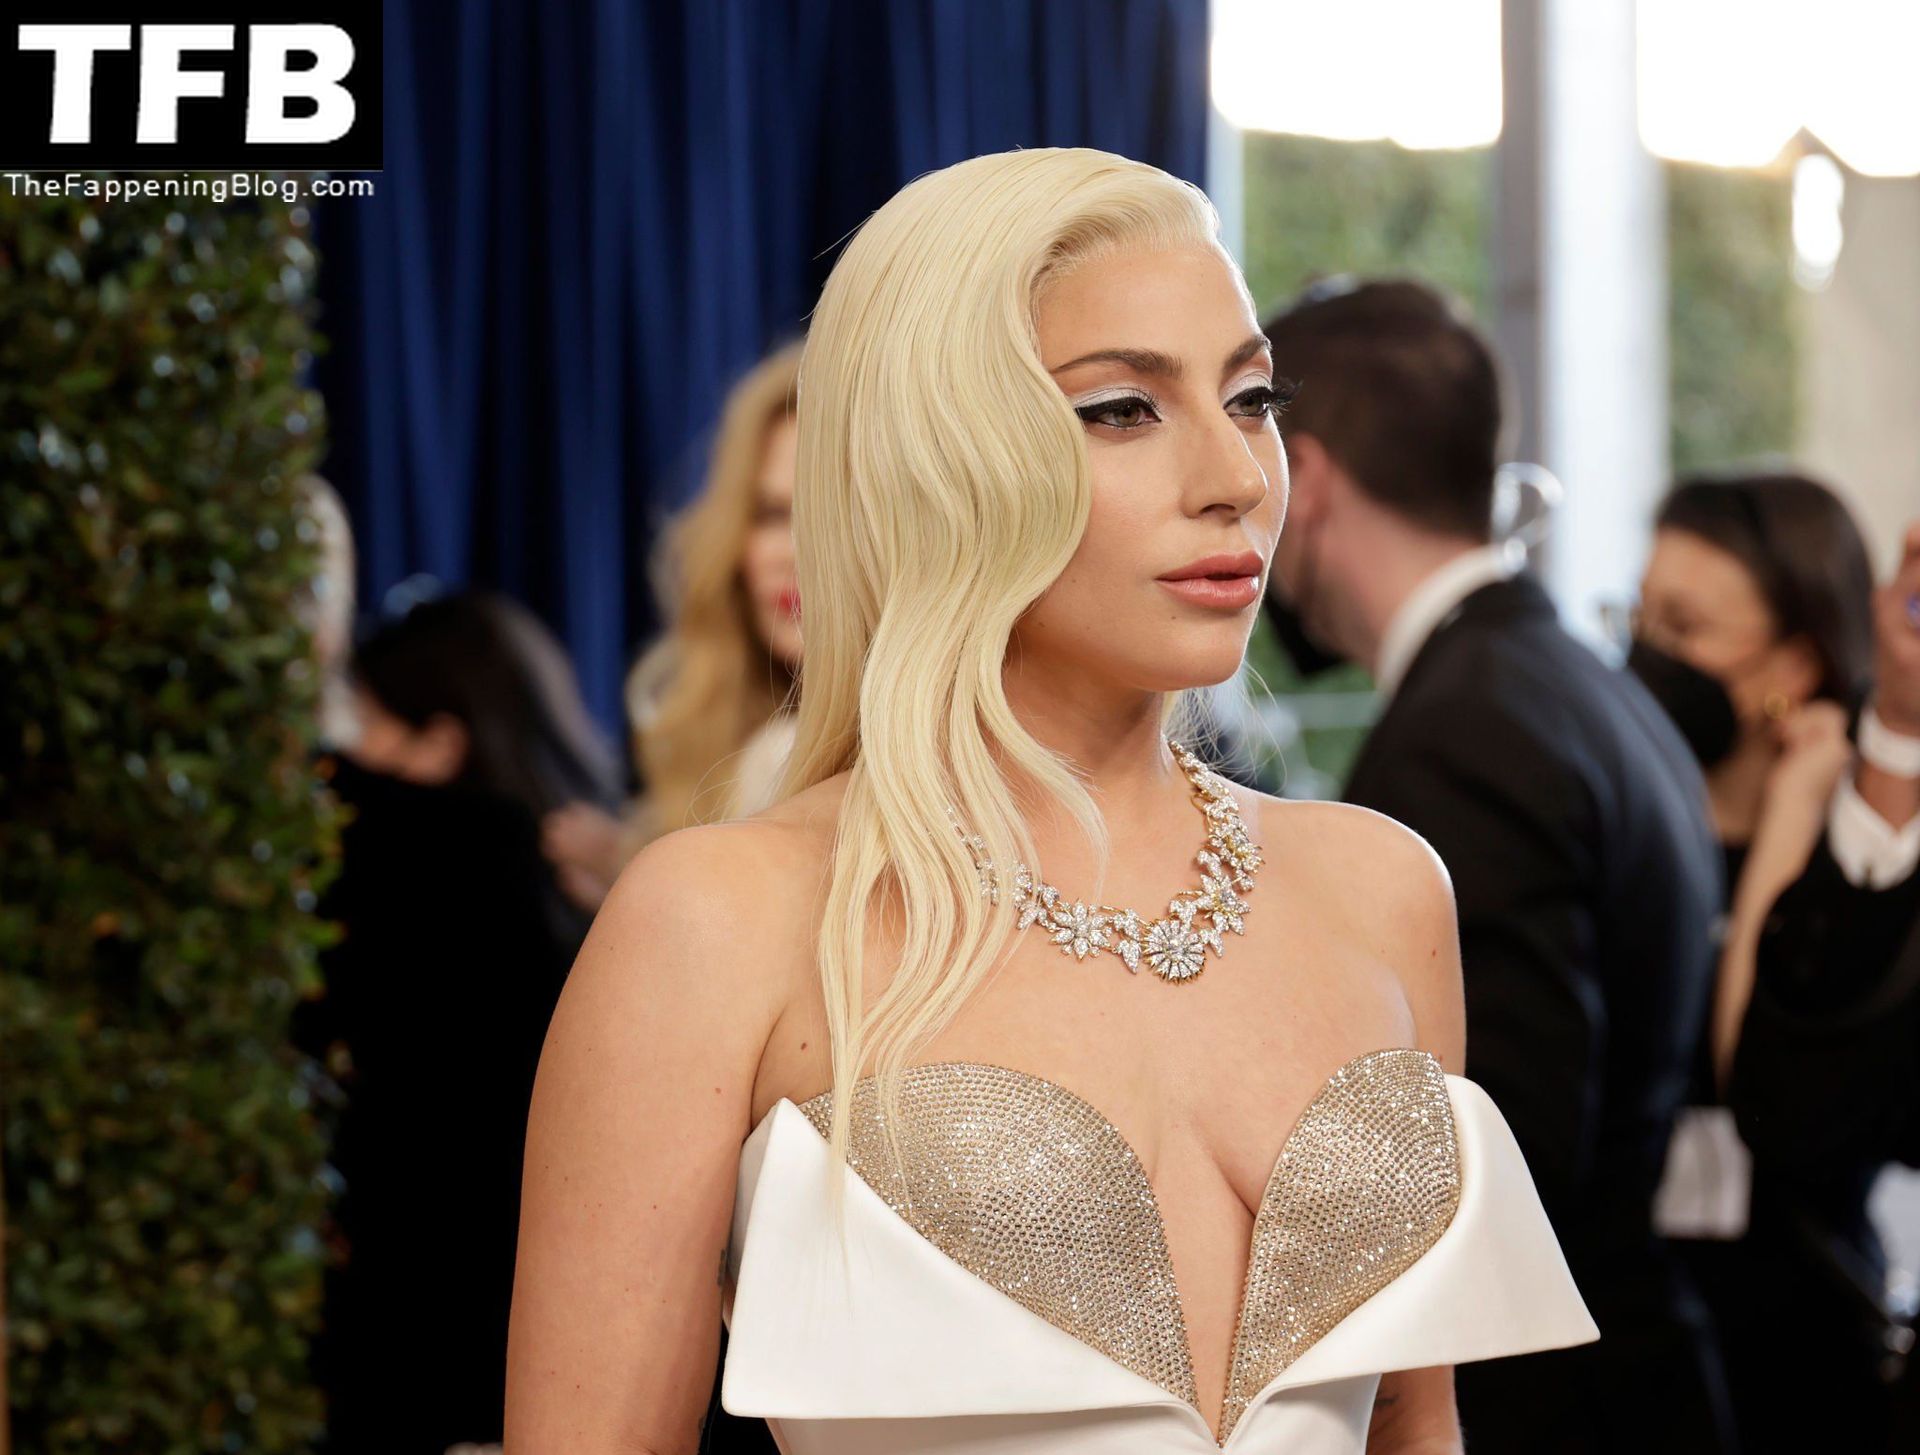 Lady-Gaga-Sexy-The-Fappening-Blog-48.jpg